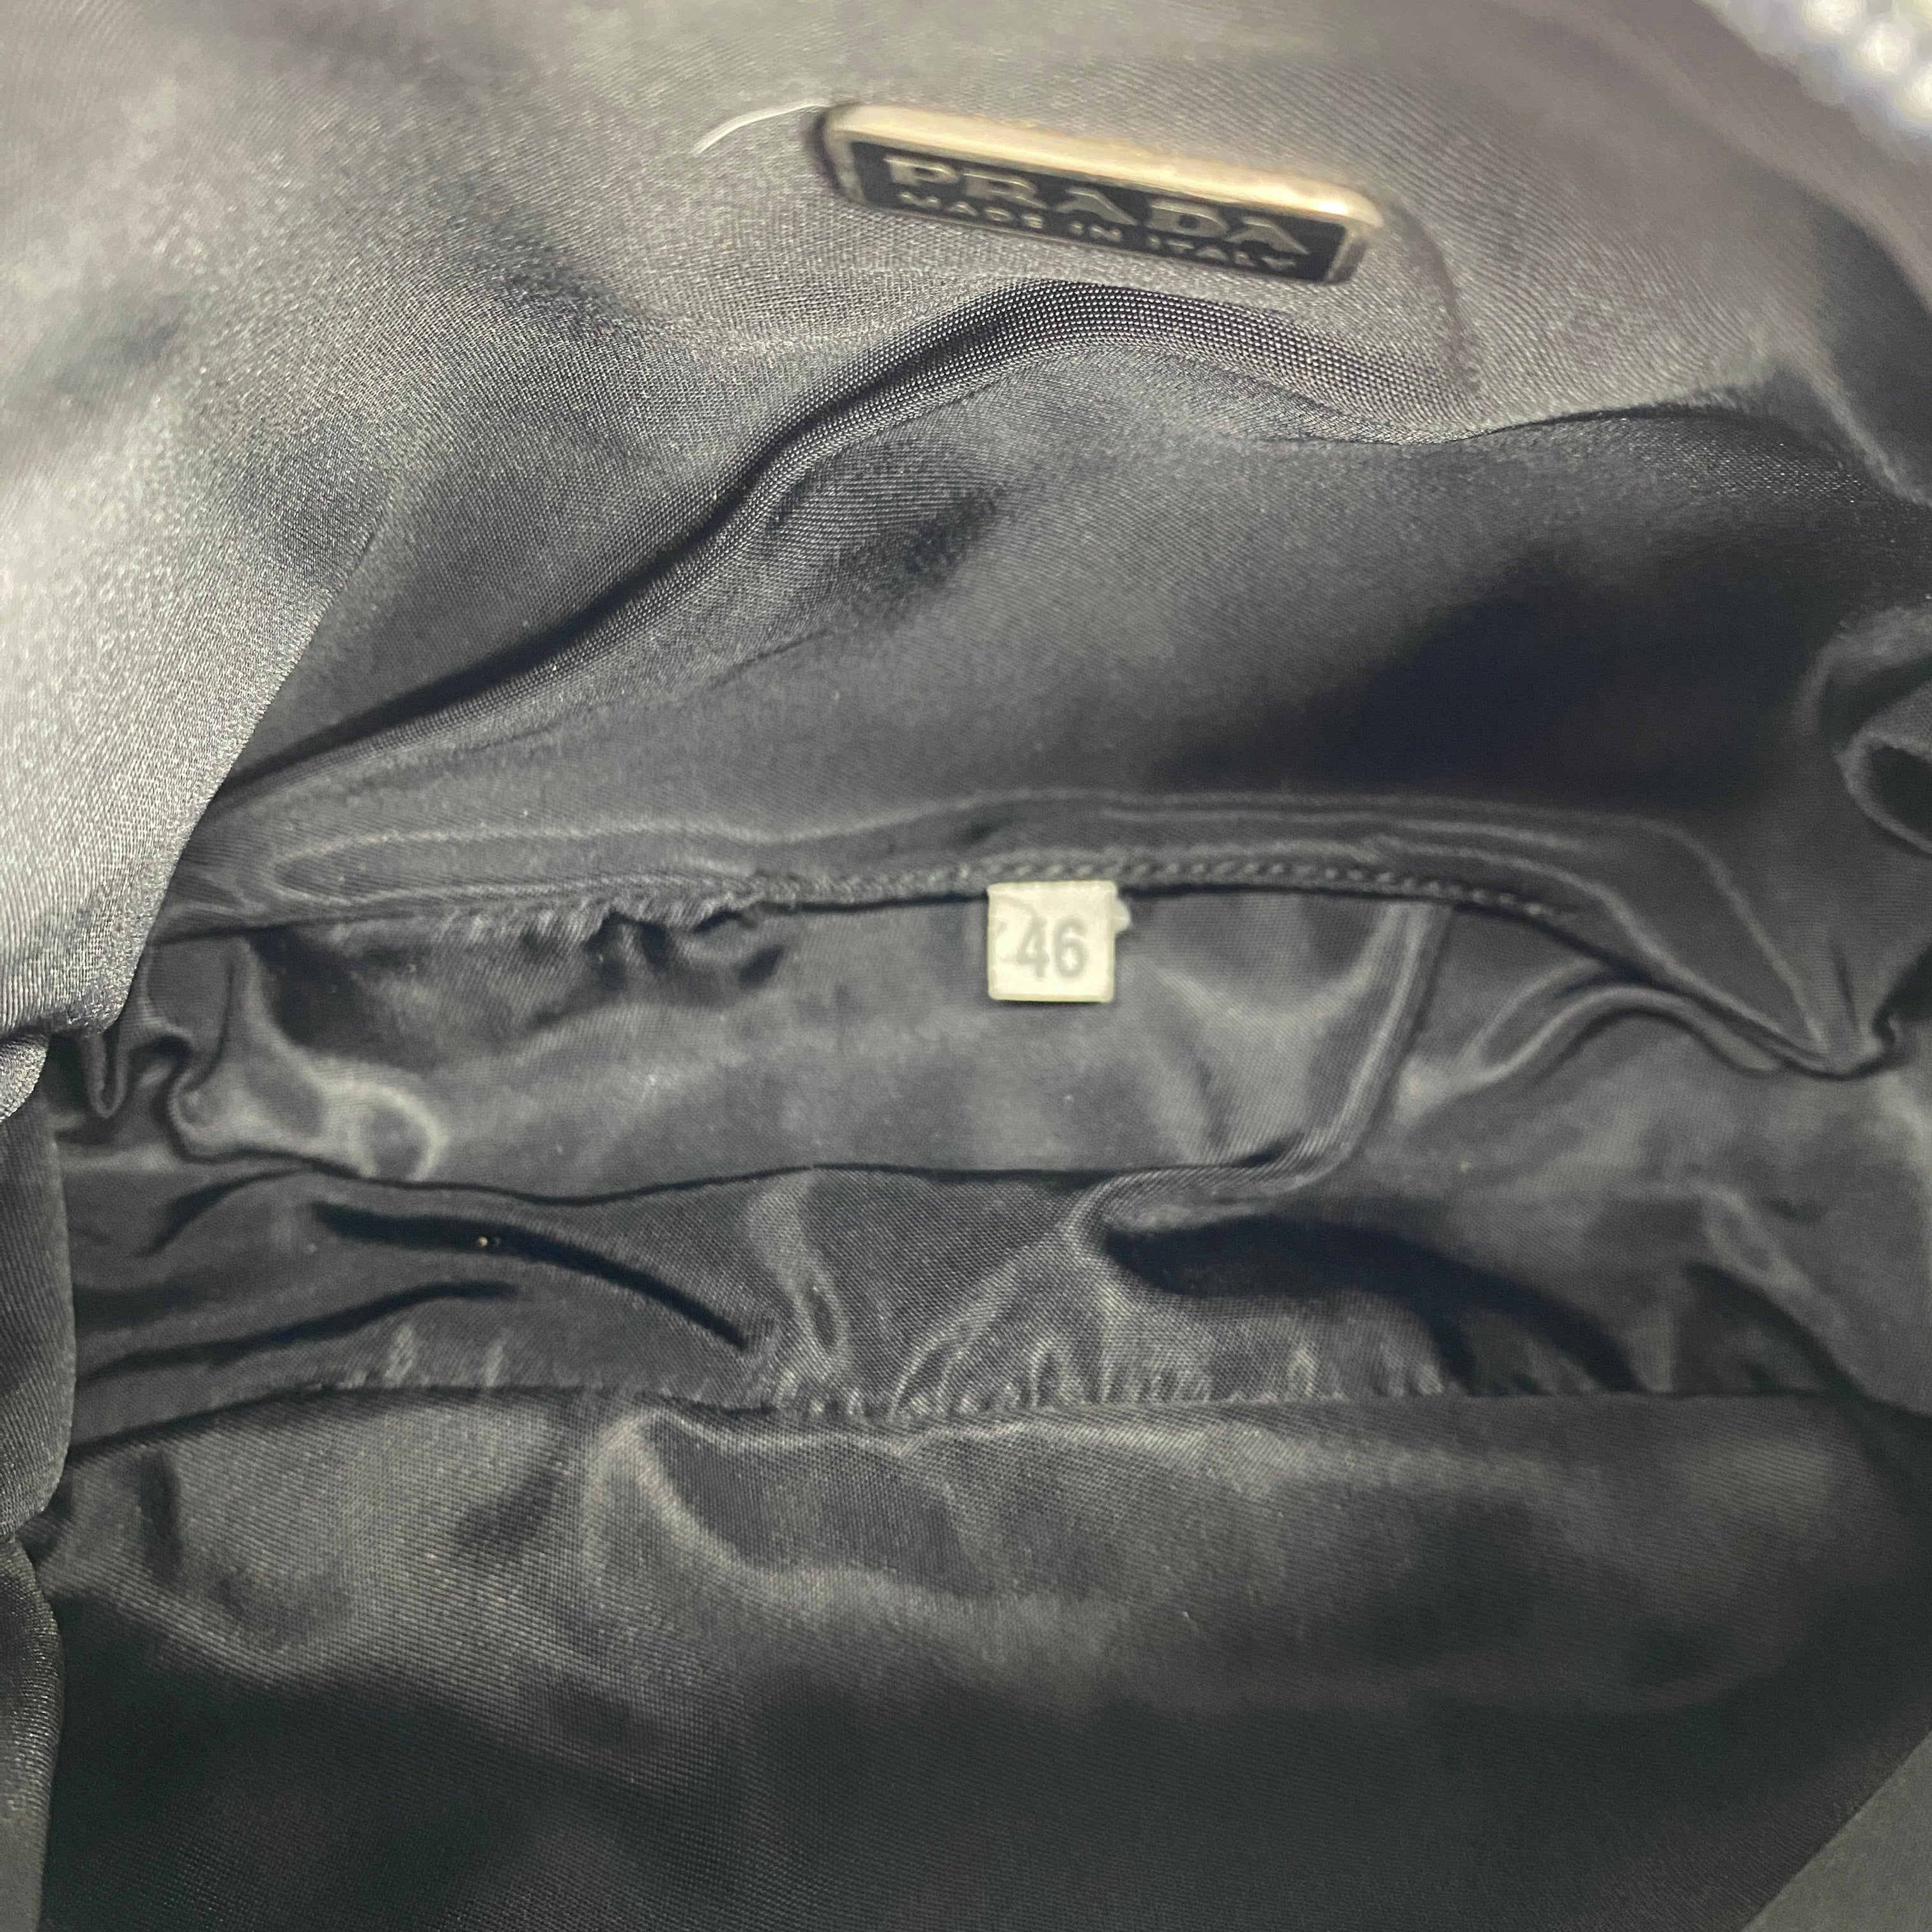 Nylon Tessuto Shoulder Bag Black - Vintage Luxuries